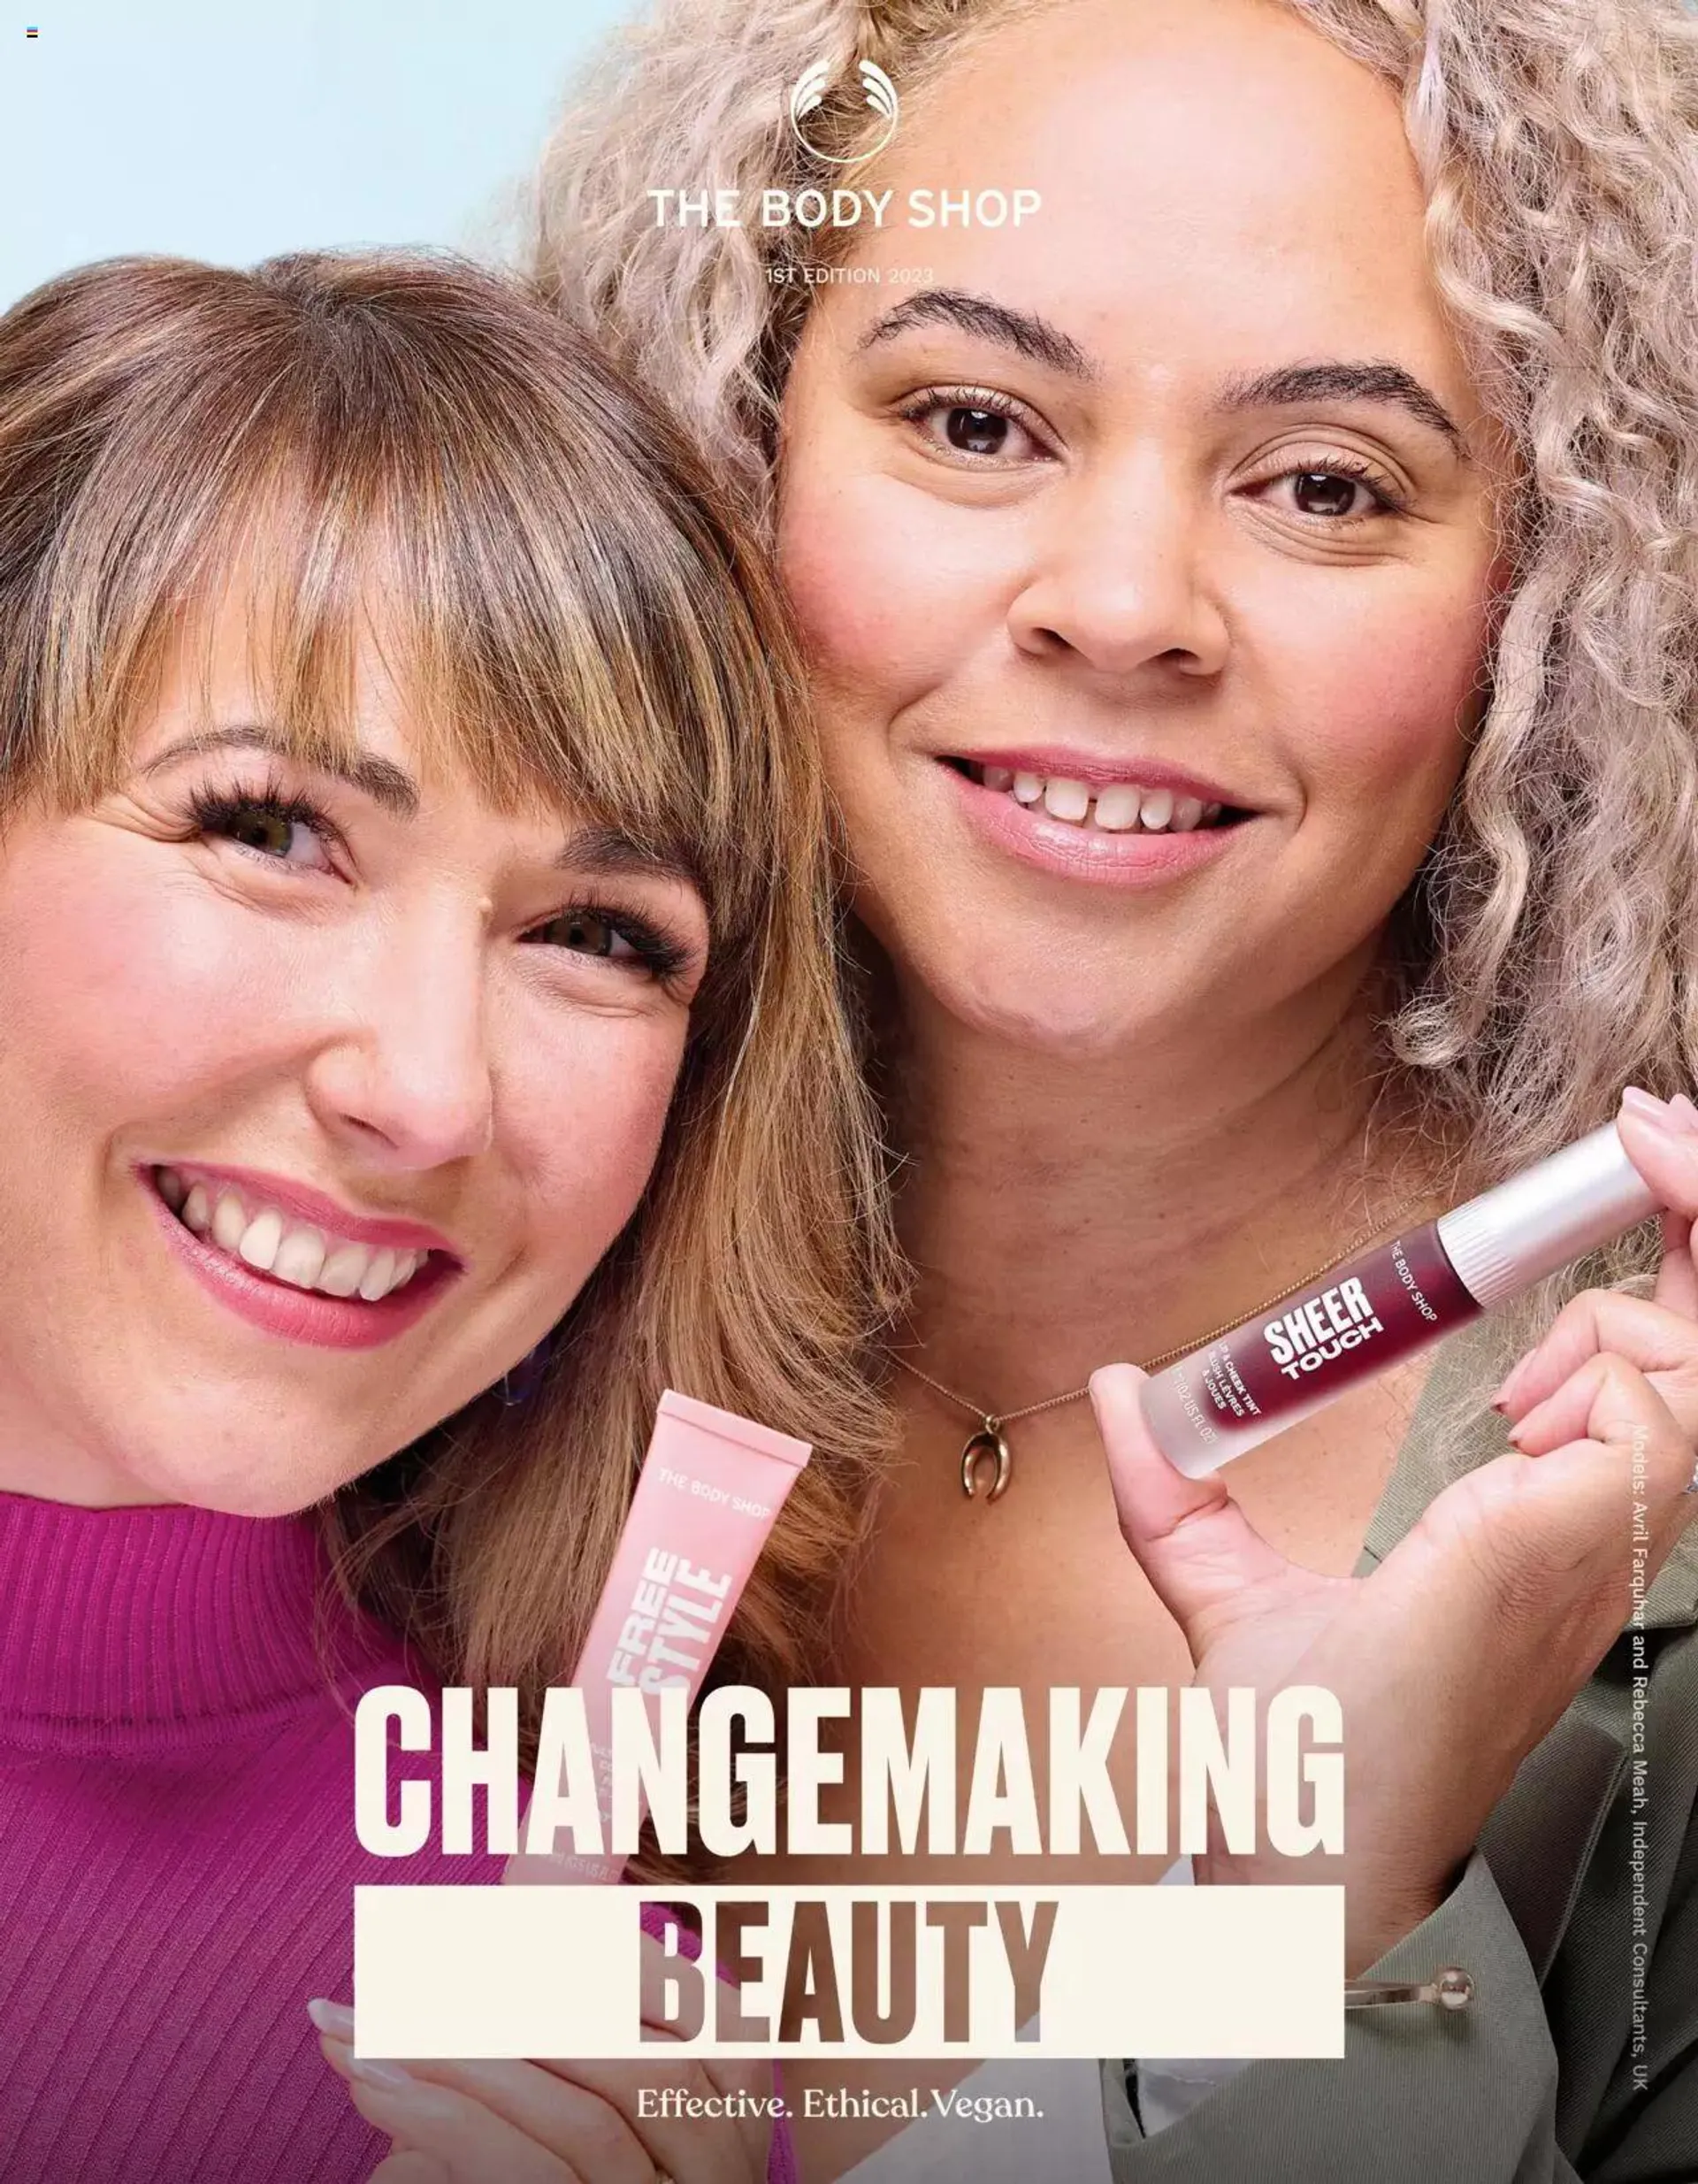 The Body Shop Catalogue Changemaking Beauty - 0